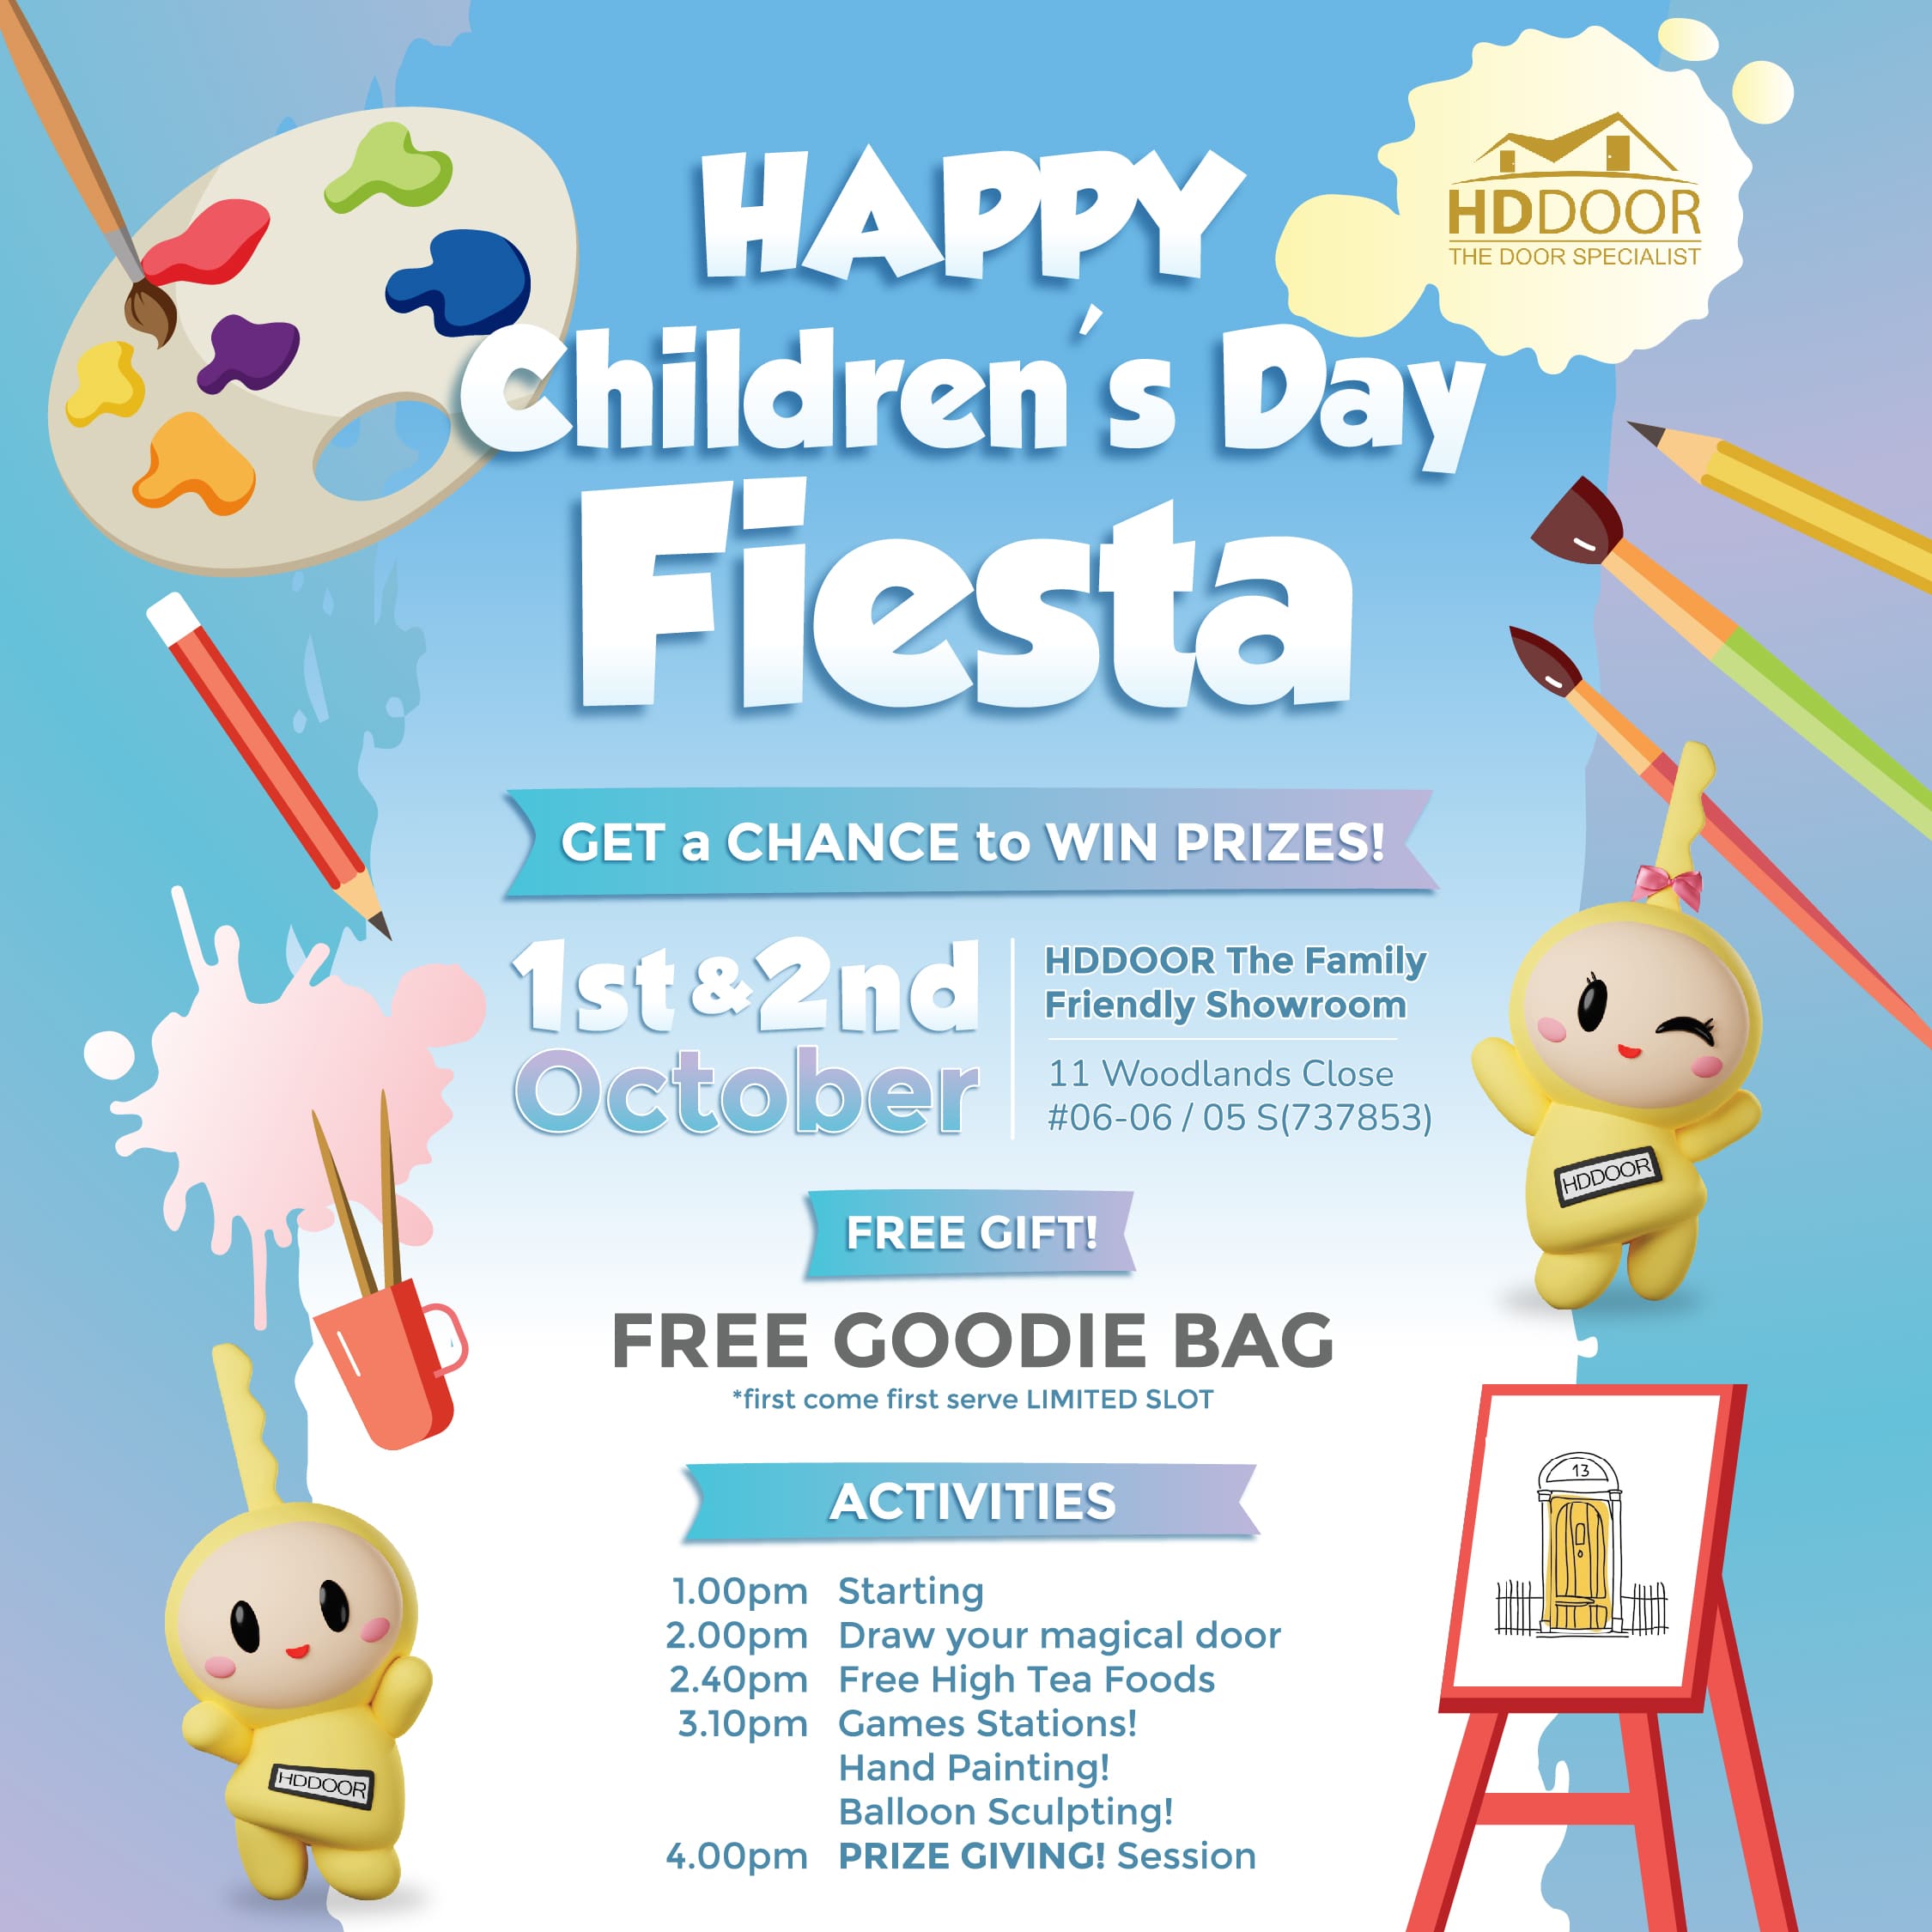 Children's Day Fiesta - HDDoor, Woodlands, North East, Singapore